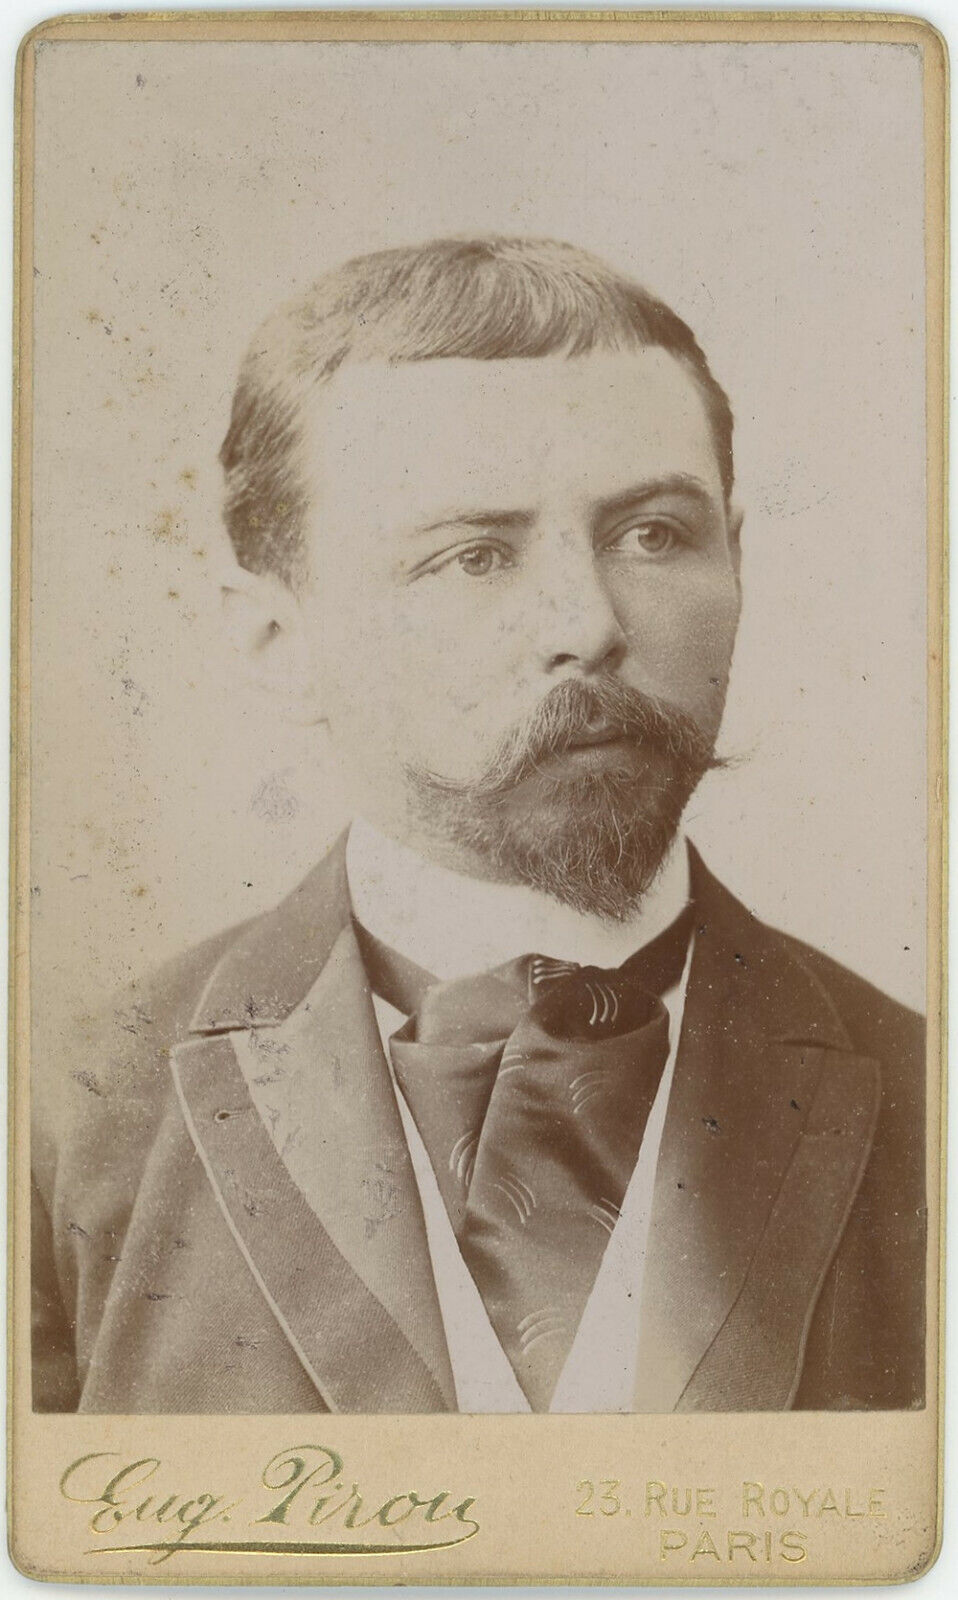 CDV circa 1895. Augustin Gilbert, French doctor by Eugène Pirou in Paris.